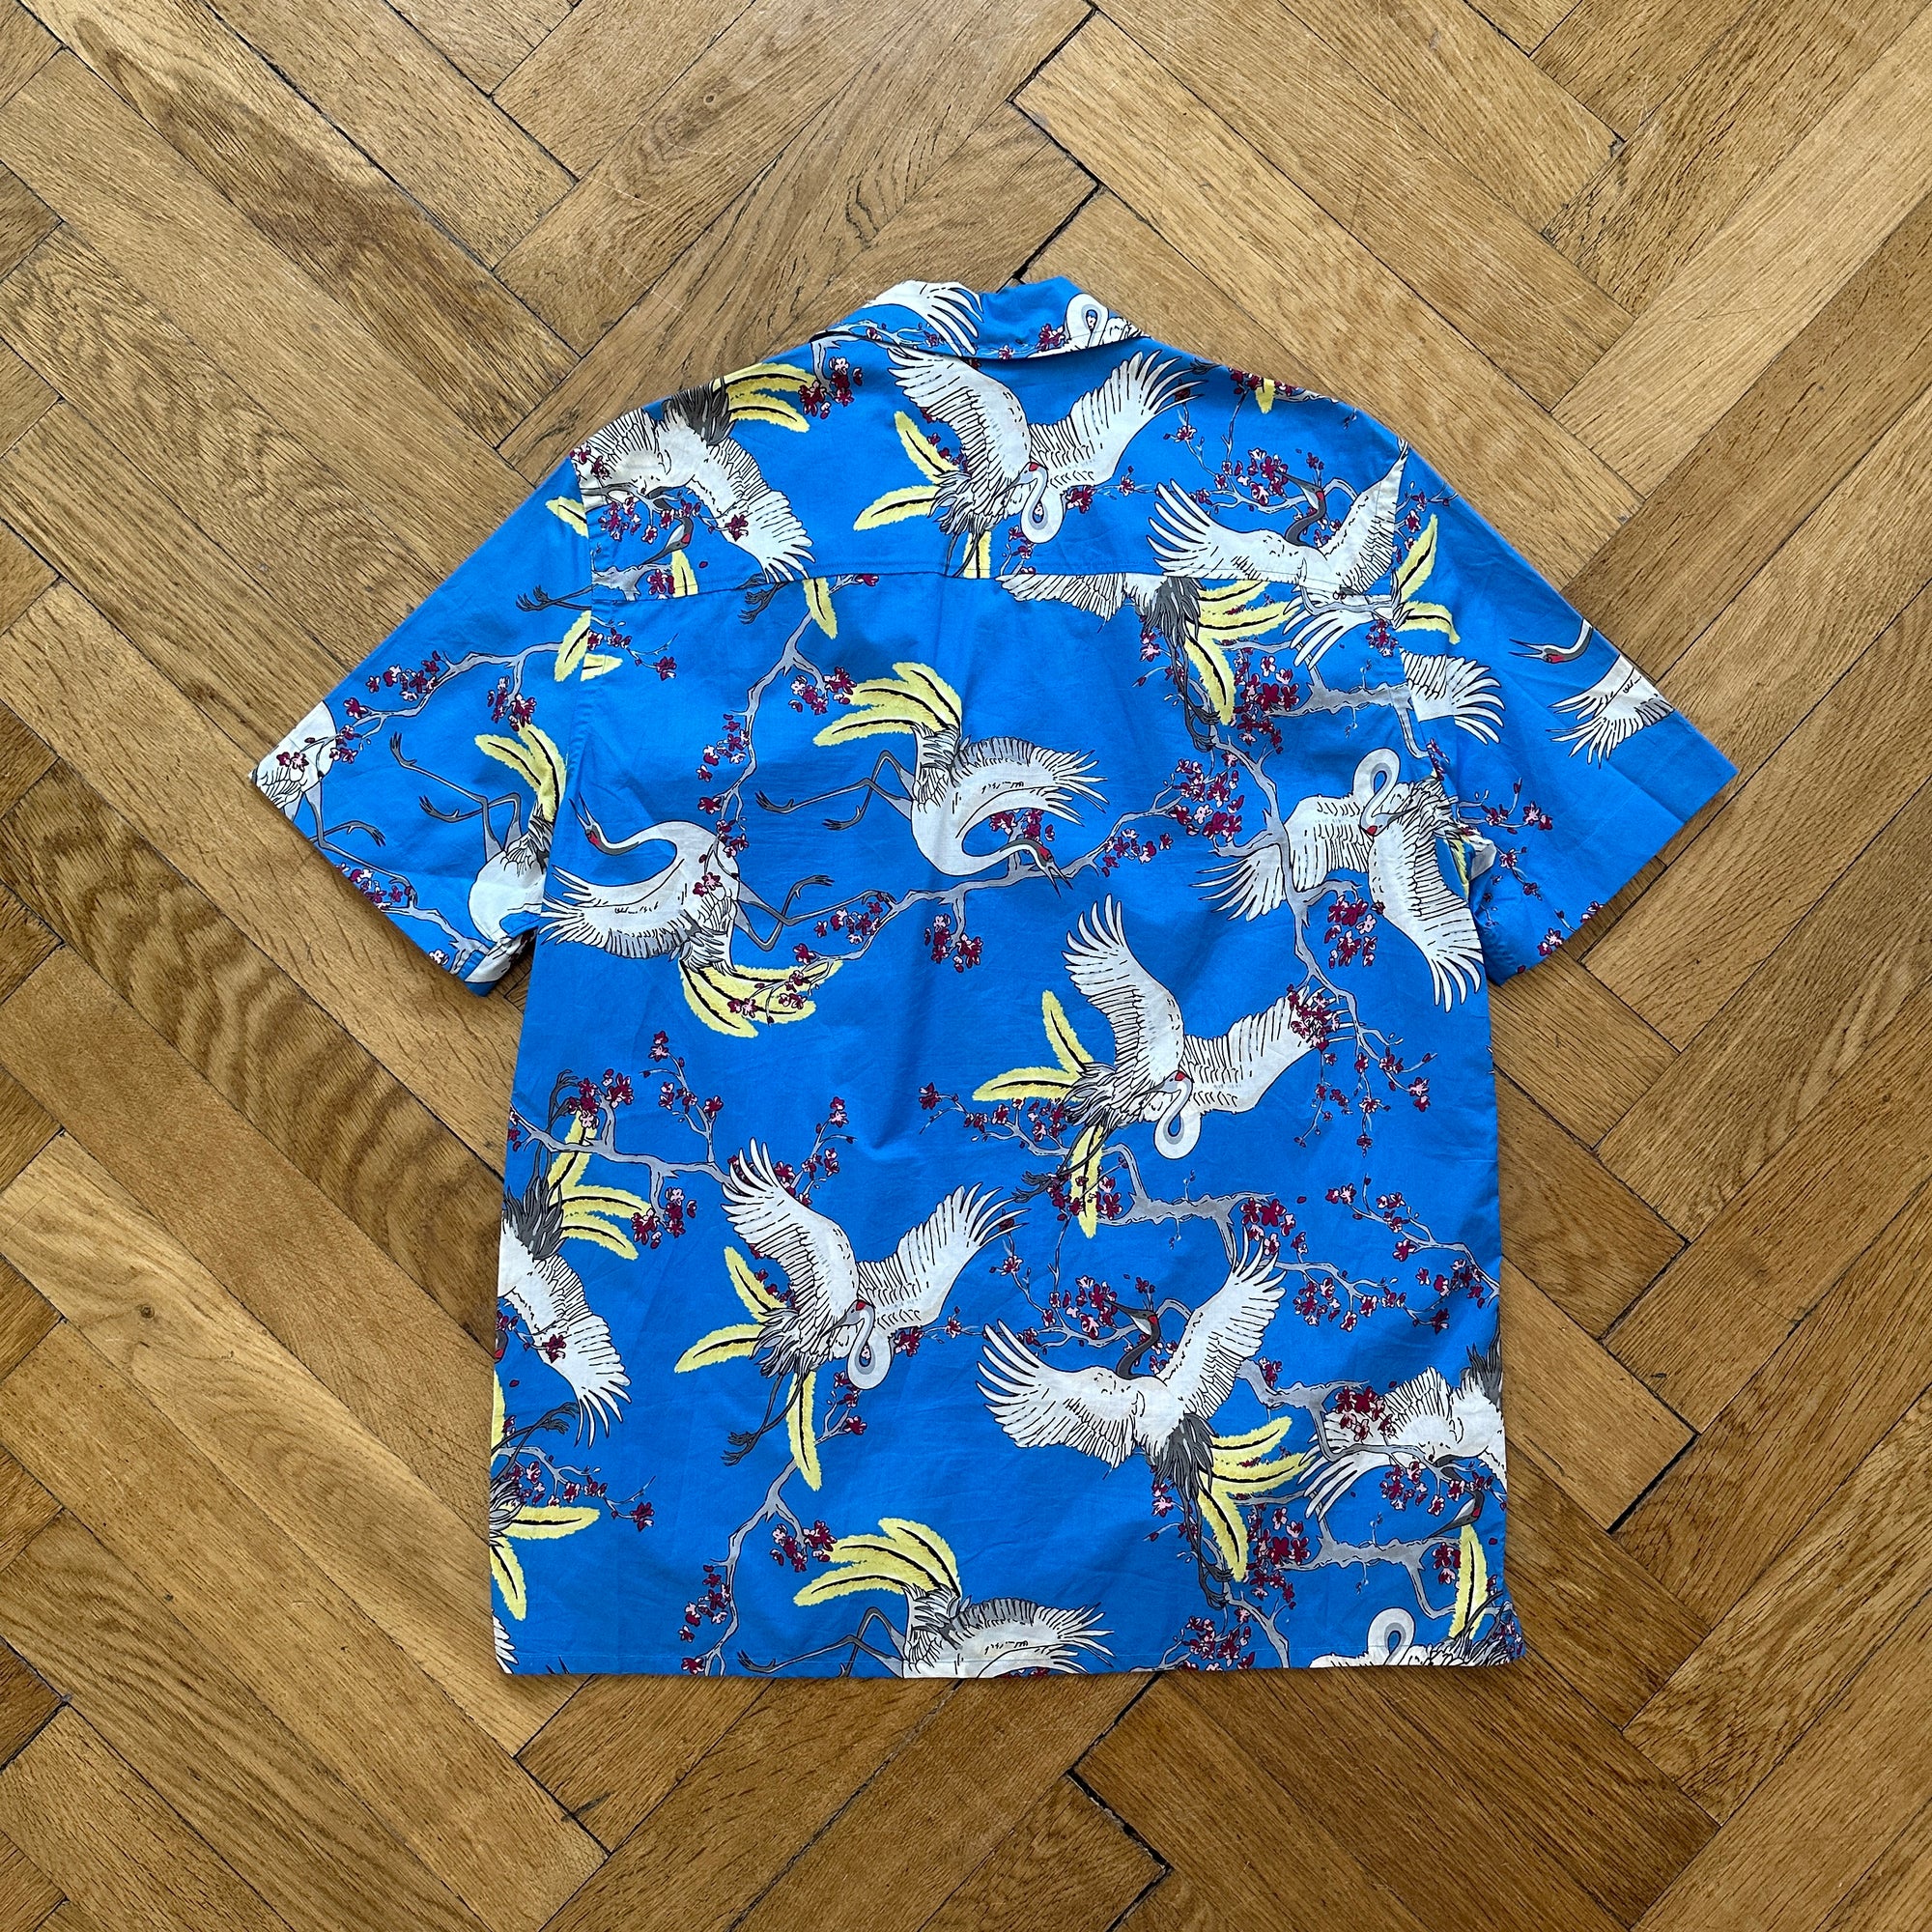 Louis Vuitton SS16 Floral Crane Print Sample Shirt